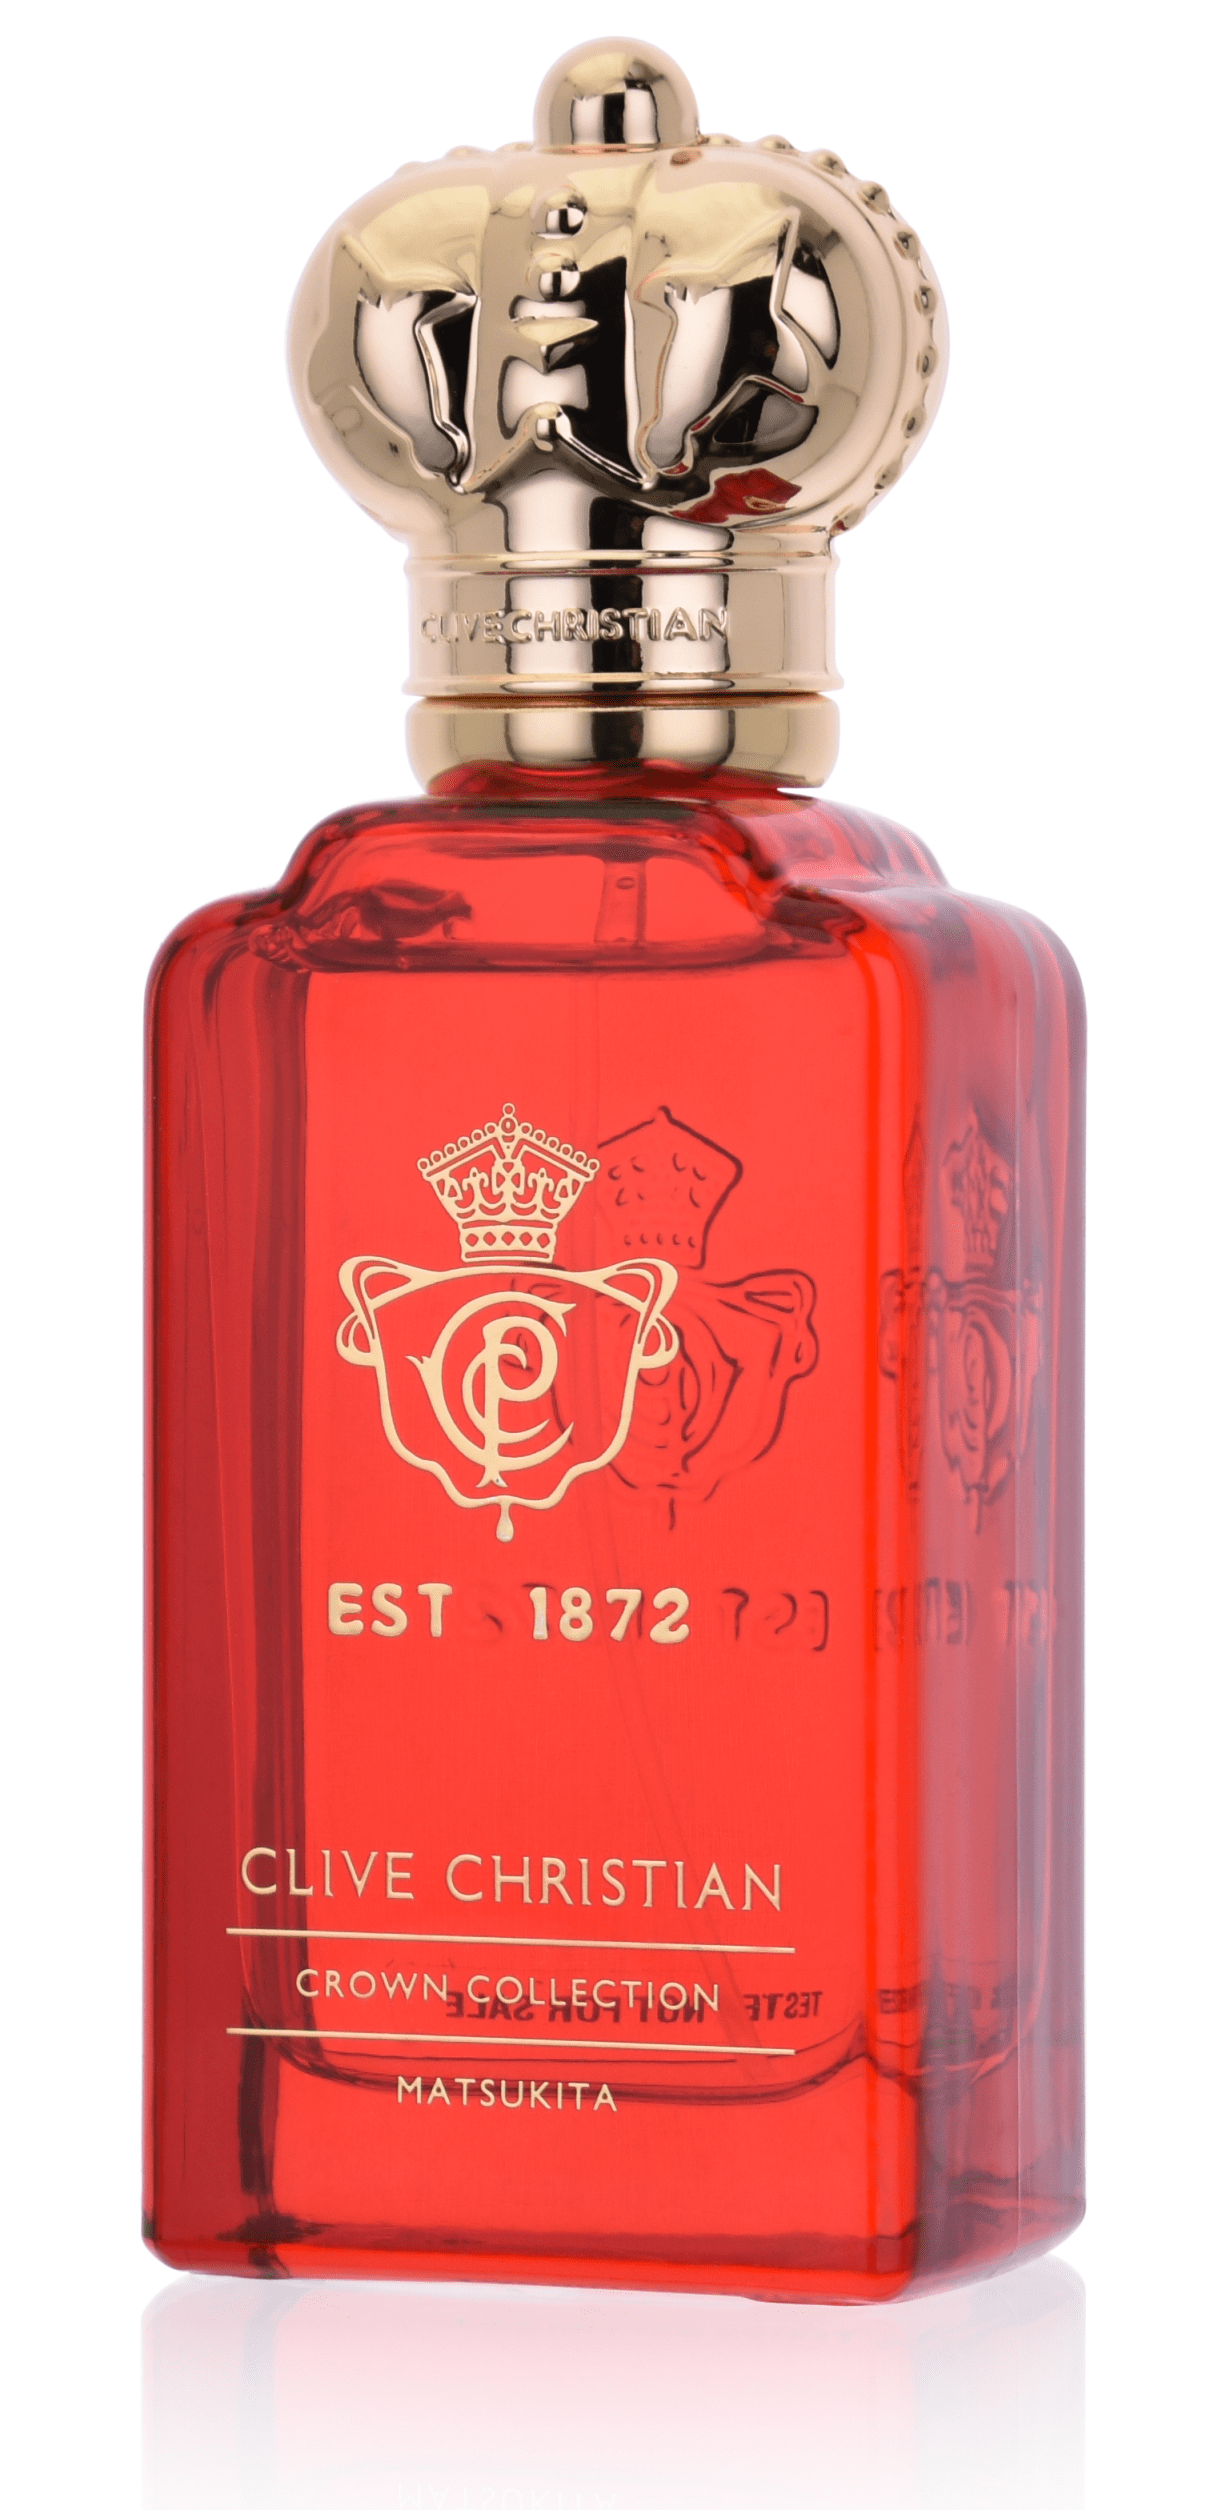 Clive Christian Crown Collection Matsukita 50 ml Parfum 